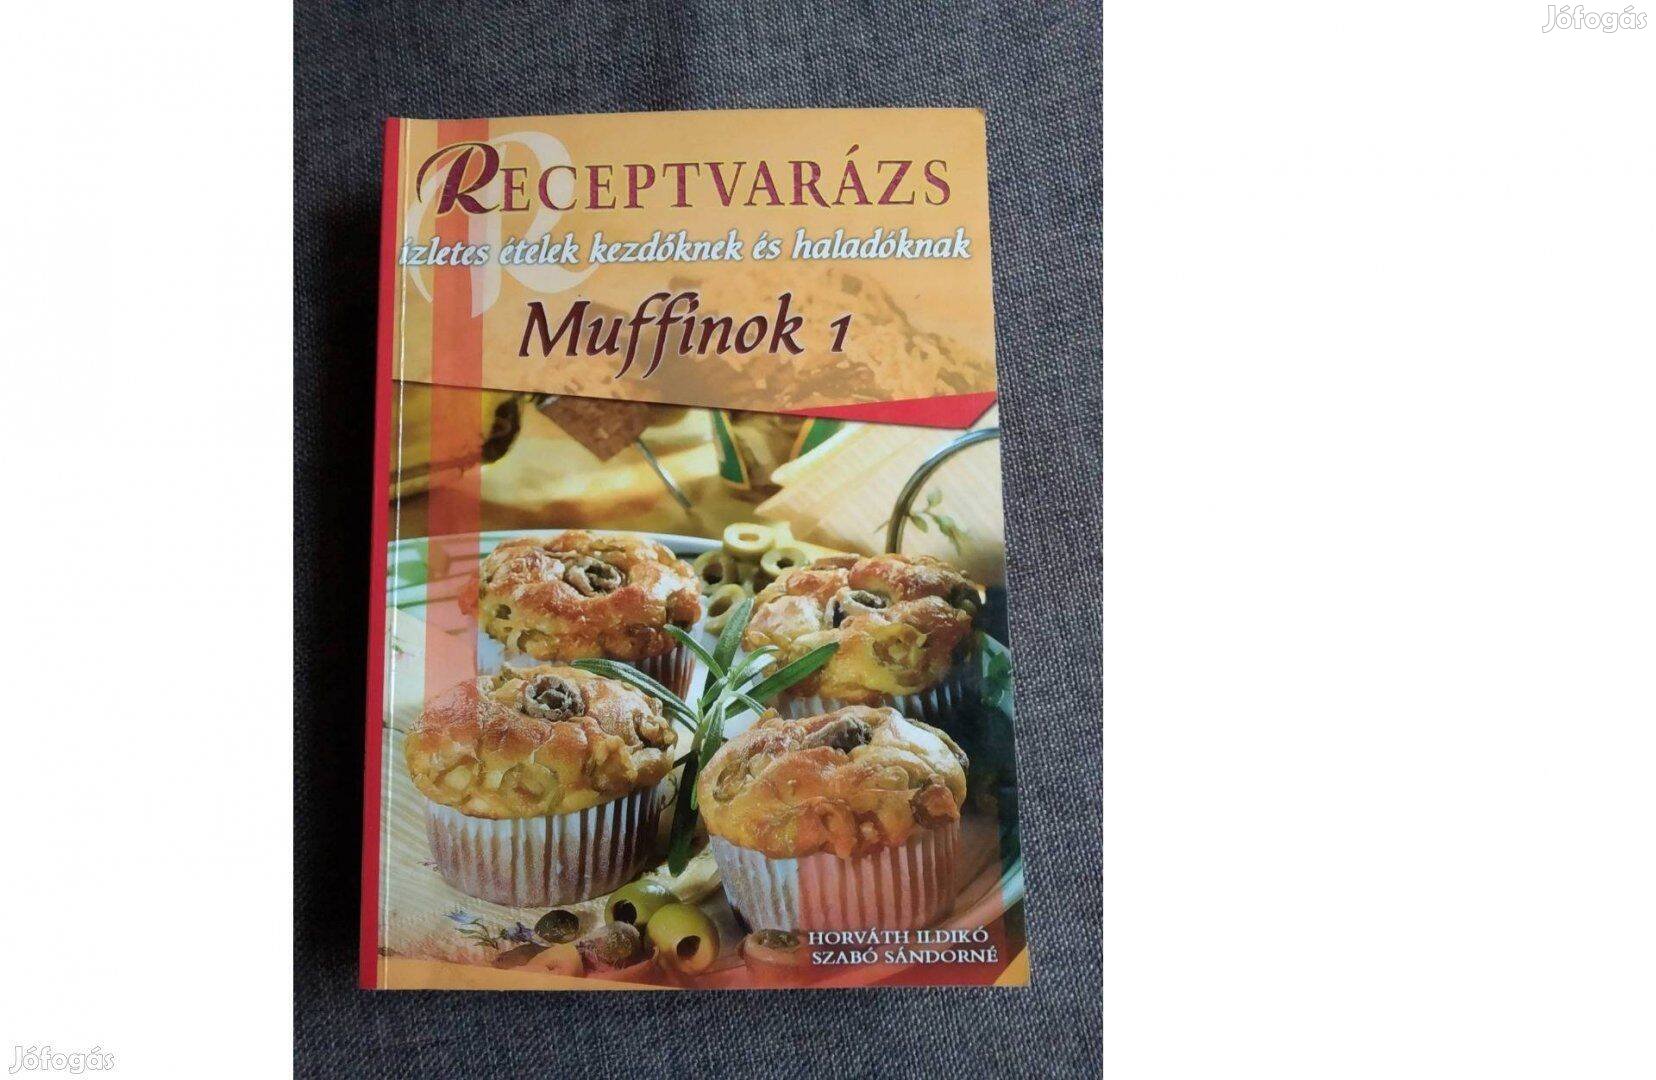 Muffinok 1 - Receptvarázs Szabó Sándorné Horváth Ildikó